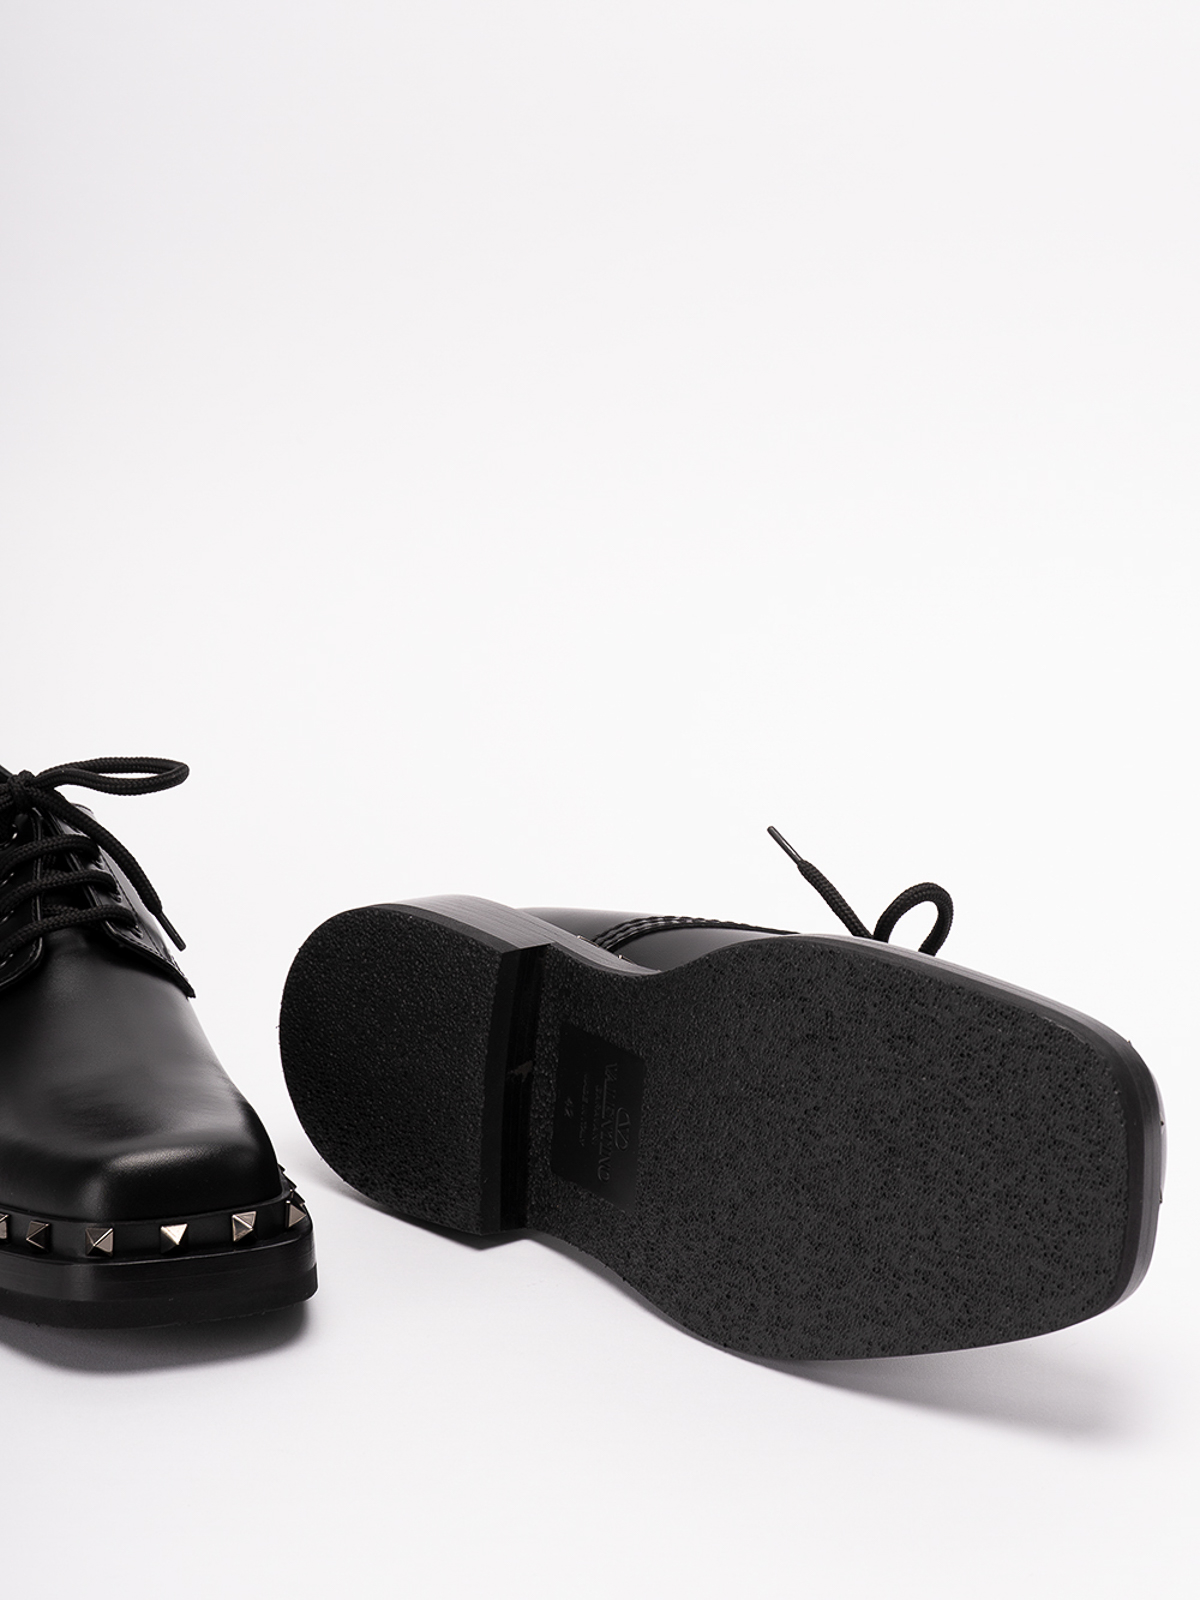 Classic shoes Valentino Garavani `rockstud` leather lace-up shoes - 3Y2S0H34PMA0NO